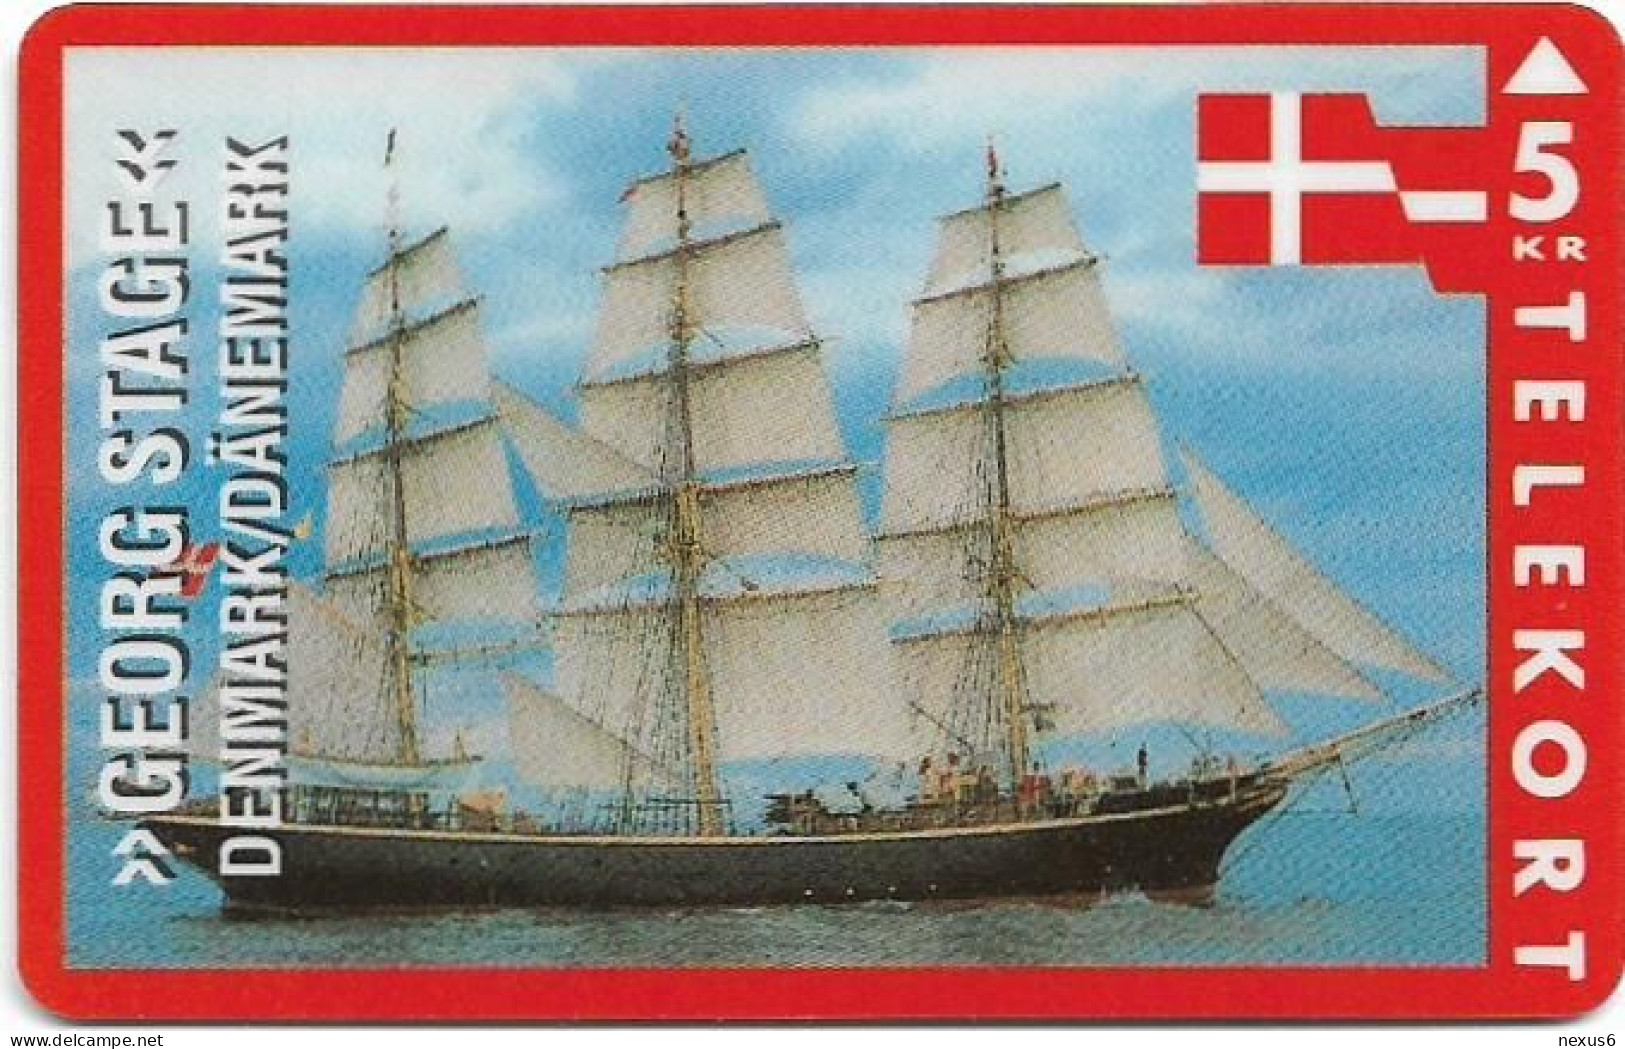 Denmark - KTAS - Ships (Red) - Denmark - Georg Stage - TDKP060 - 01.1994, 5kr, 2.500ex, Used - Dänemark